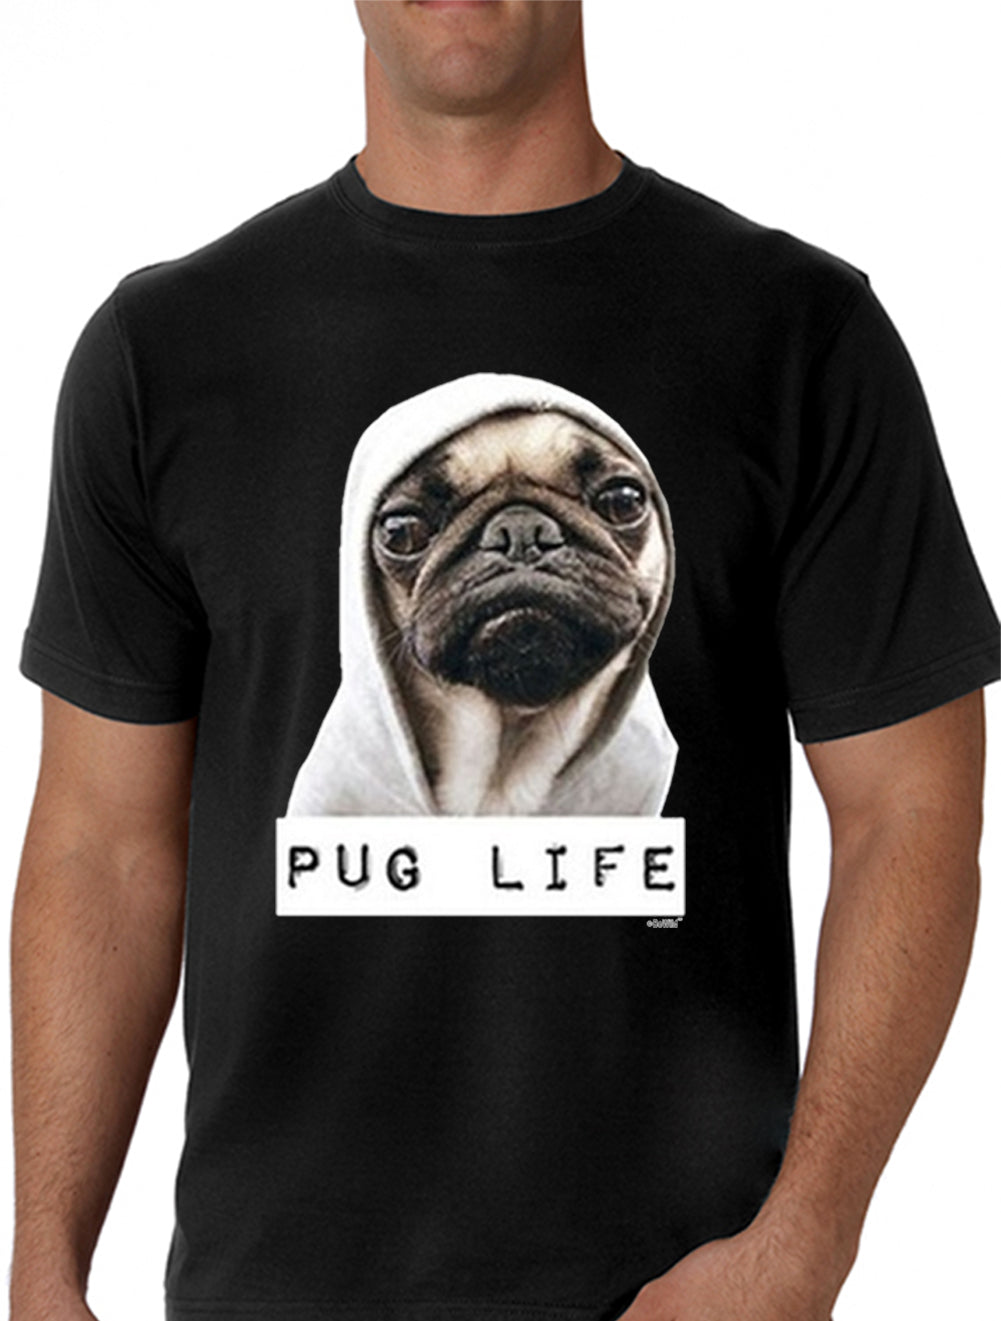 Pug Life Men's T-Shirt